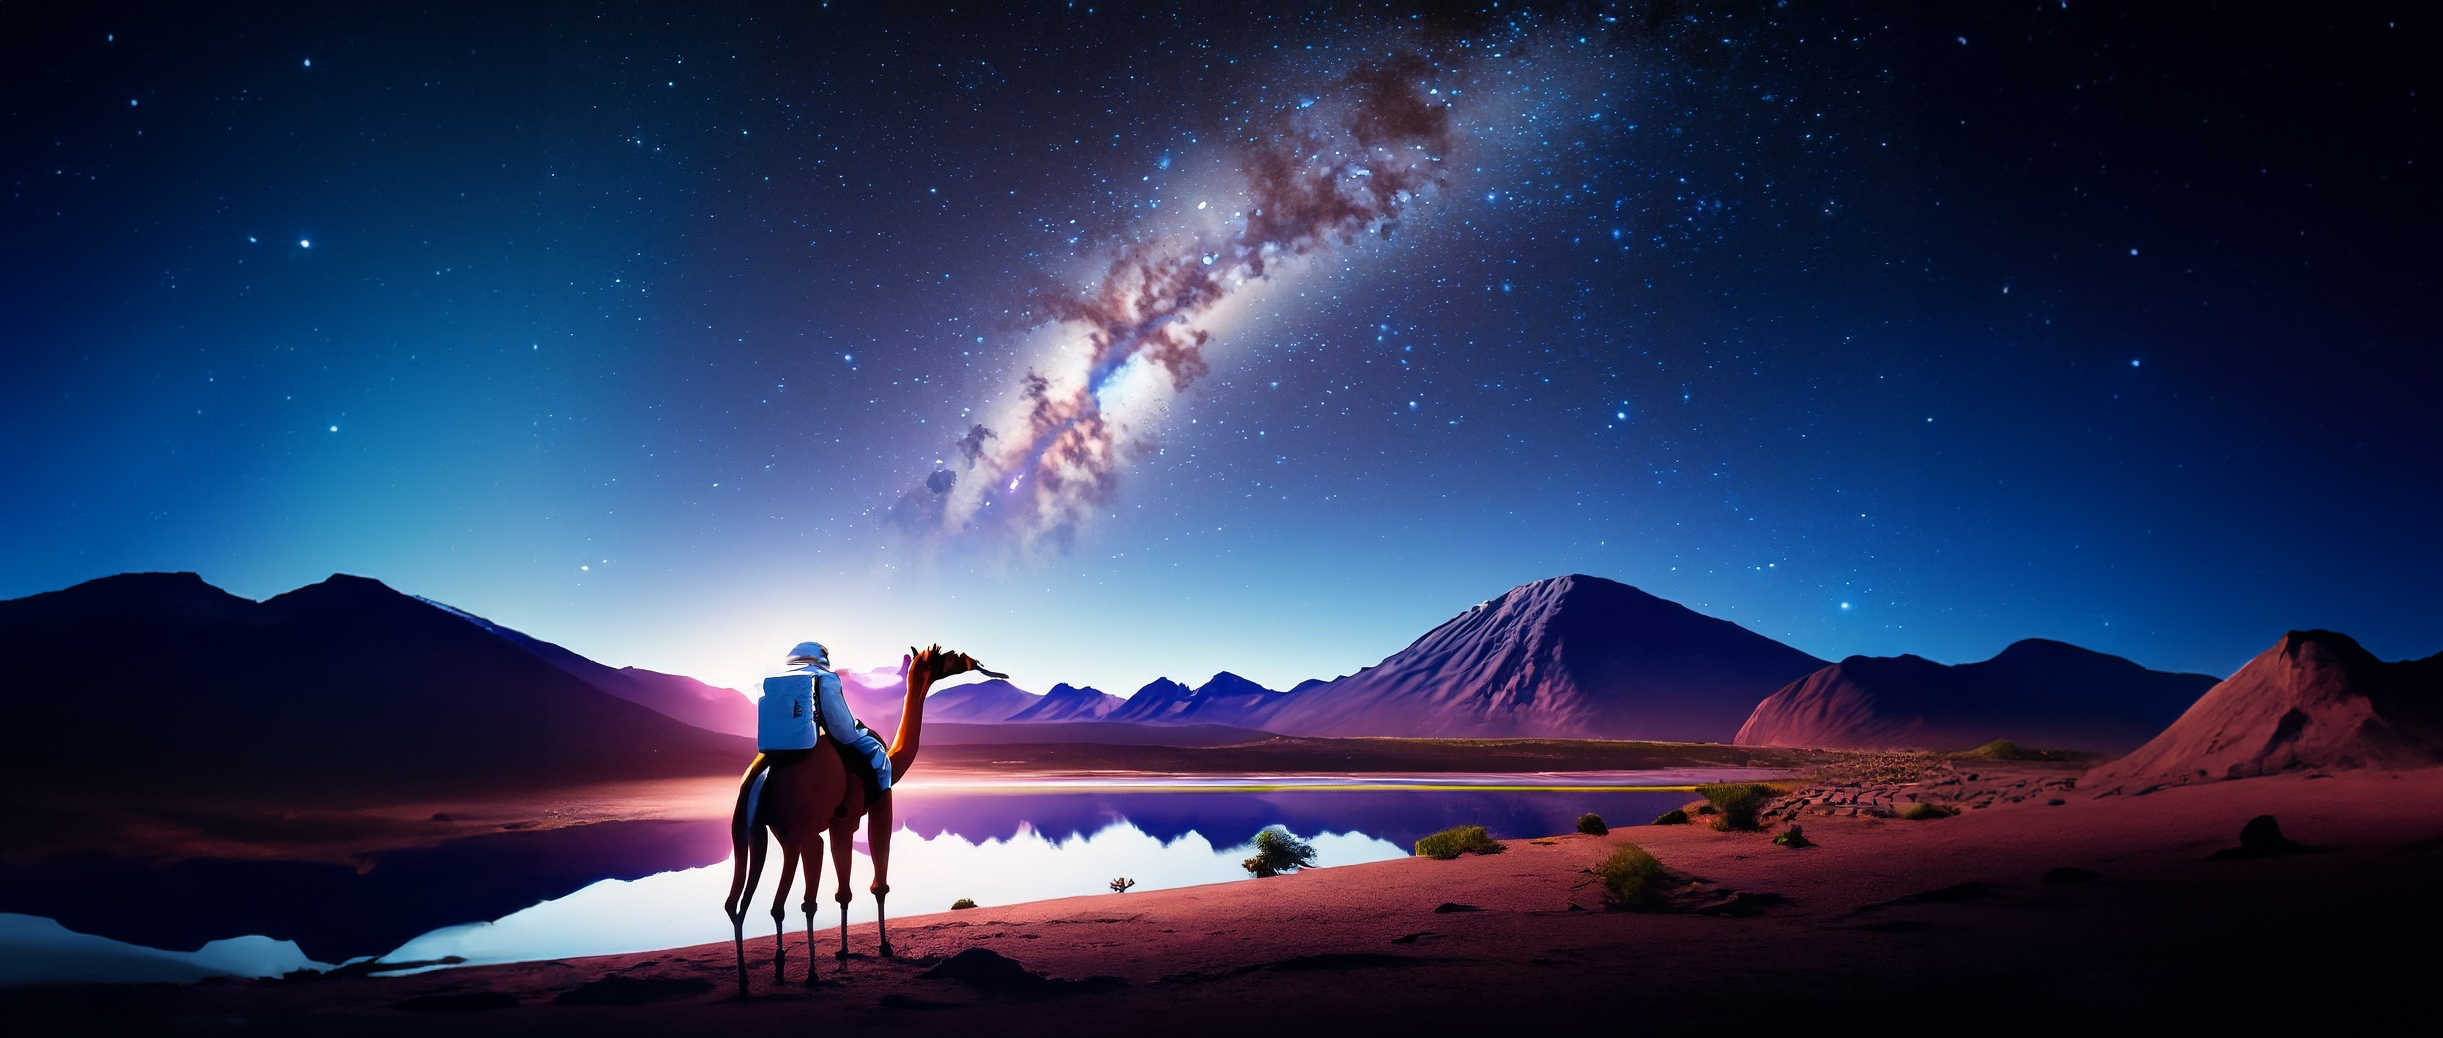 General 2443x1038 digital art space desert lake AI art water reflection sky stars animals mountains